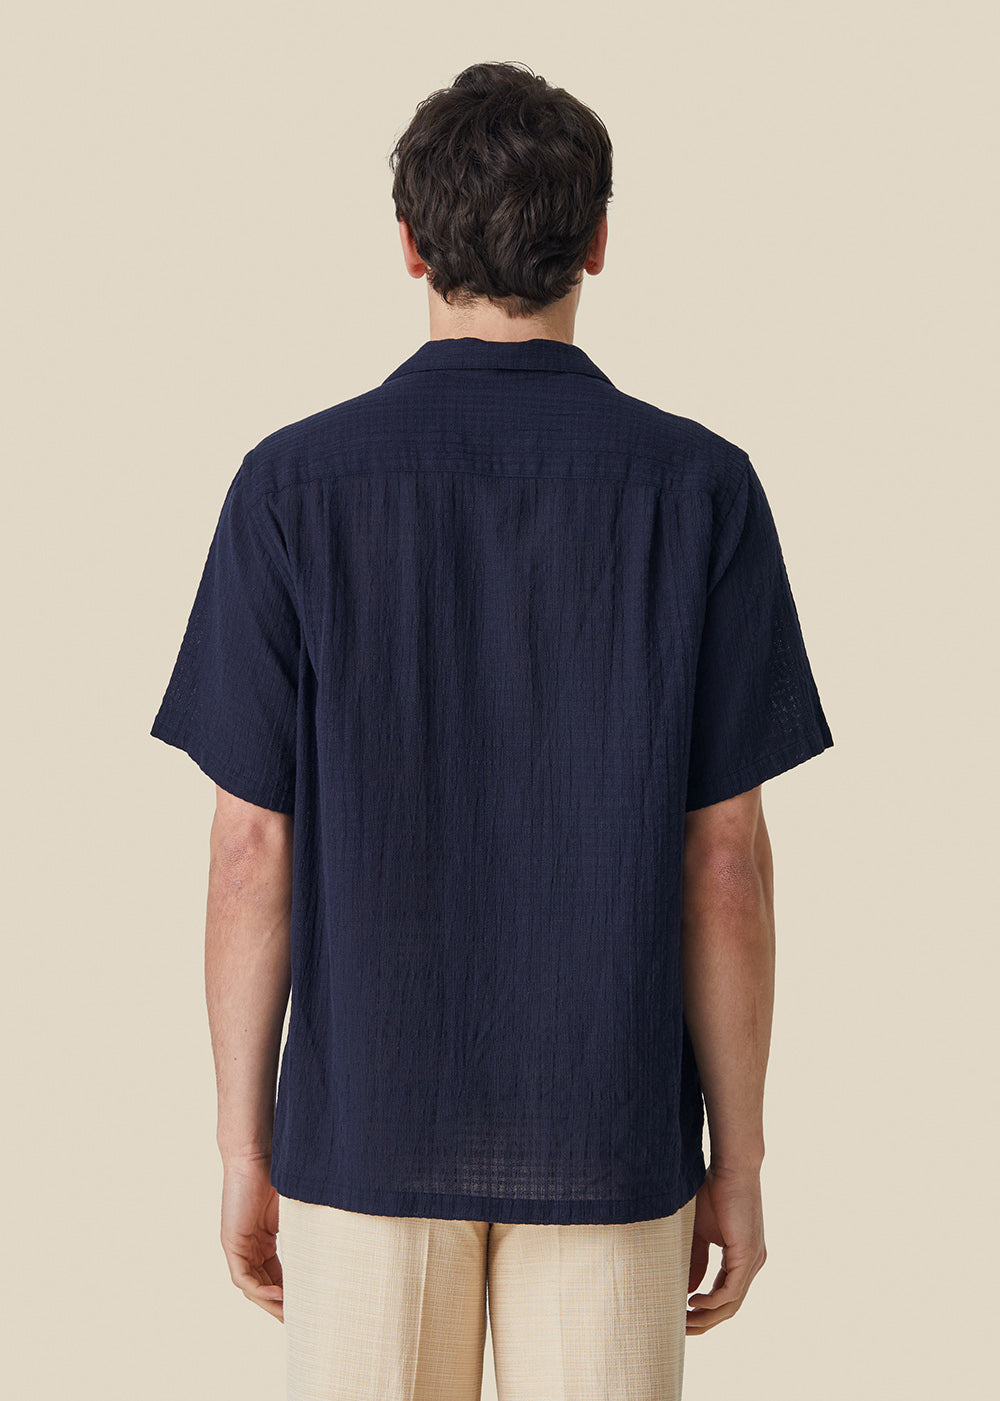 Grain Cotton Short Sleeve Shirt - Navy - Portuguese Flannel - Danali